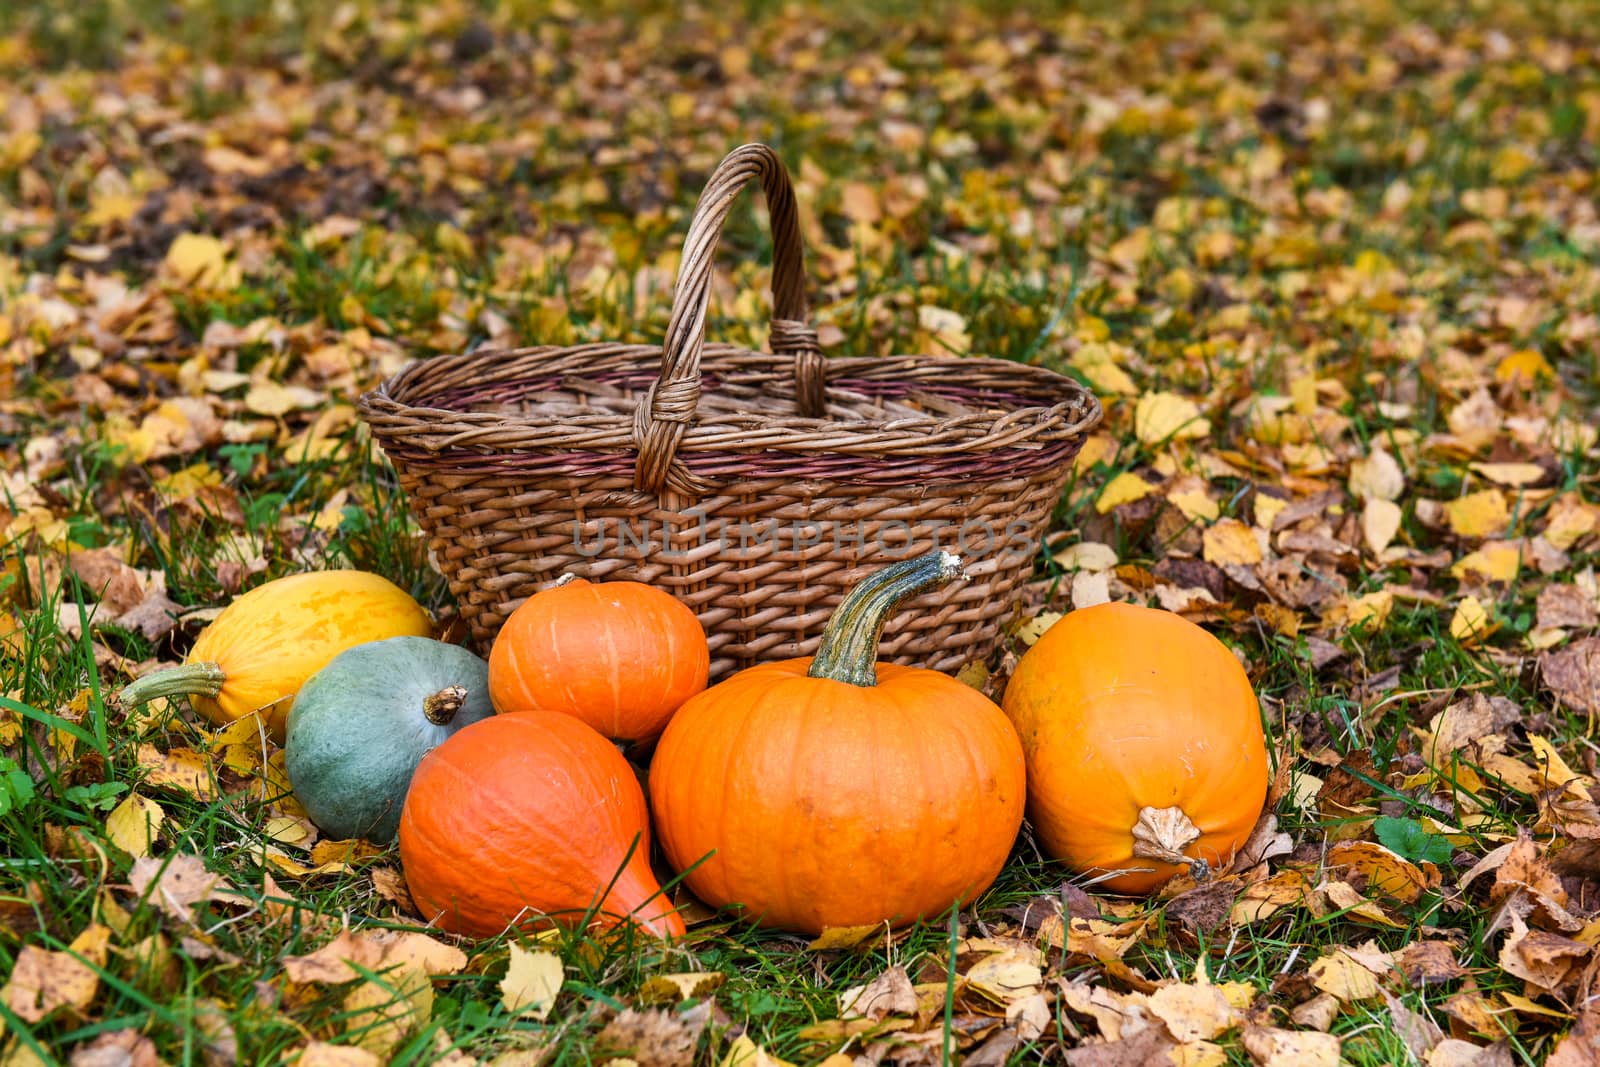 orange pumpkins ad basket against the background of autumn leaves